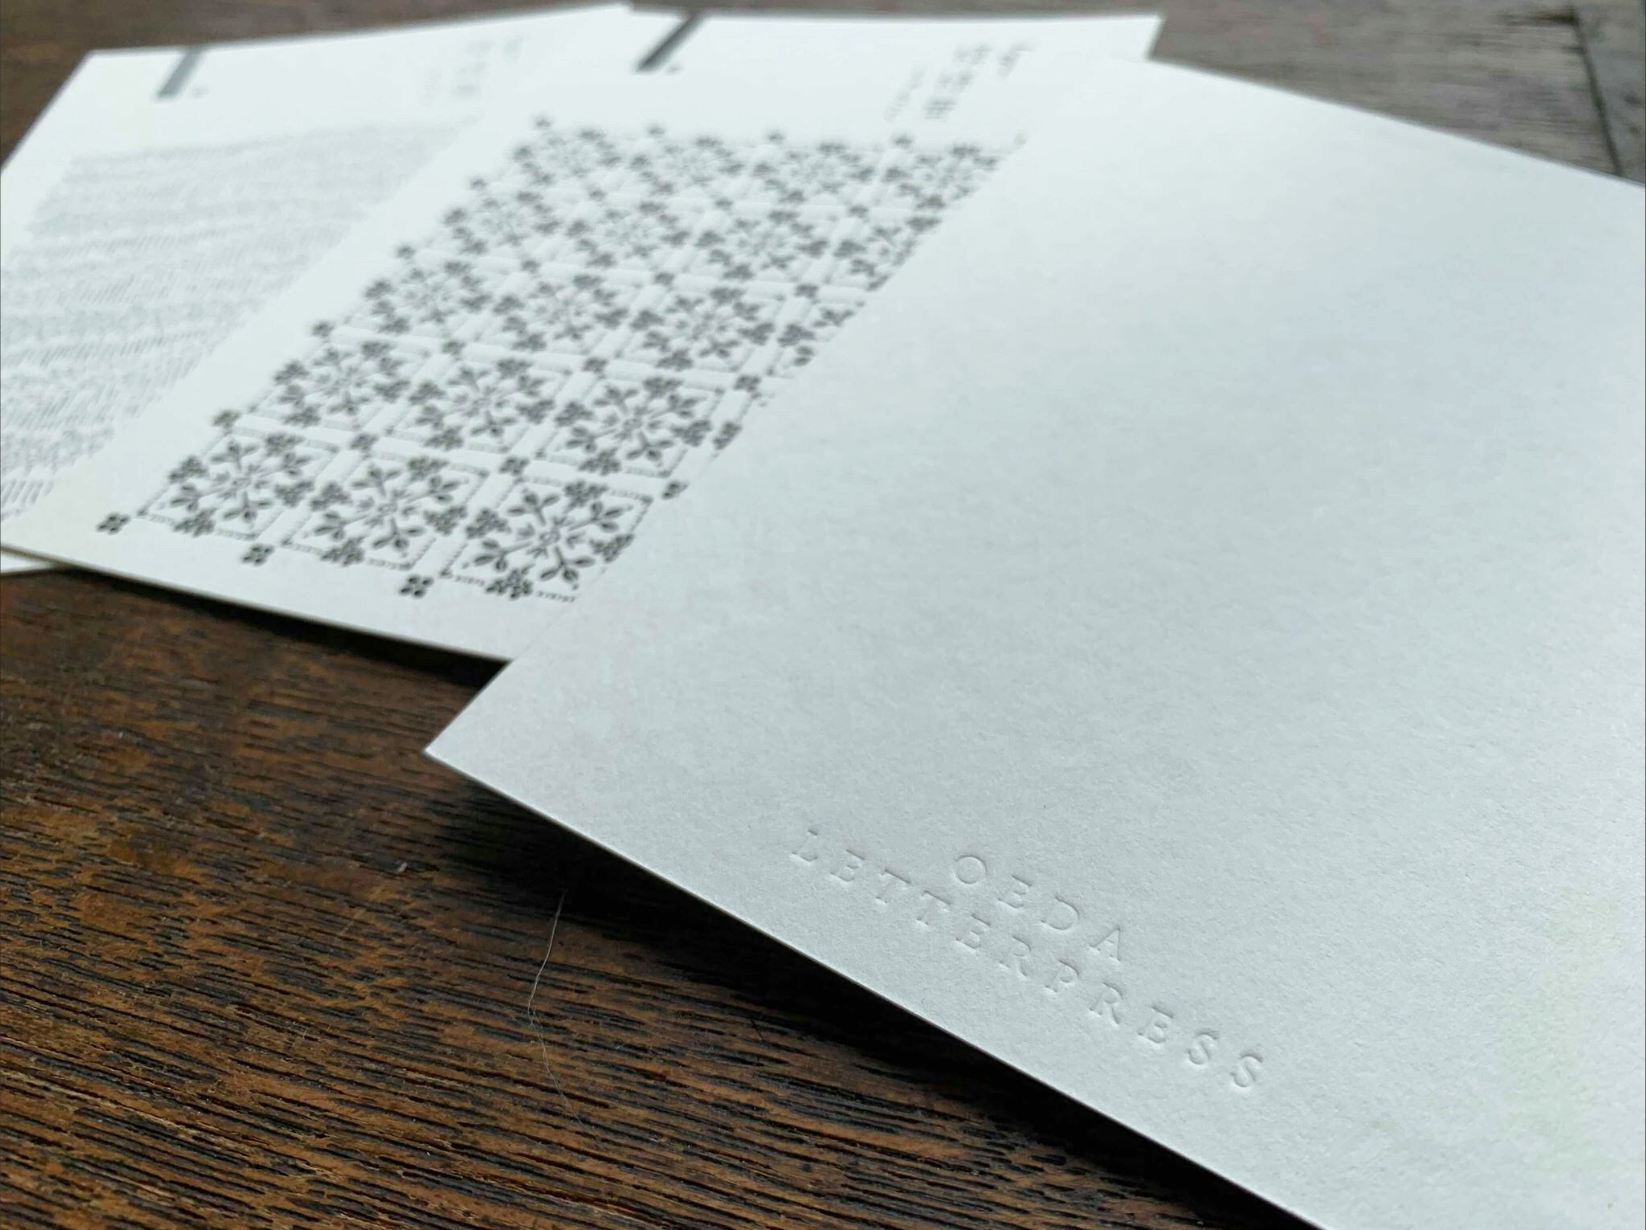 [Letterpress printing] Patterned leaves [Junkoku/Black]